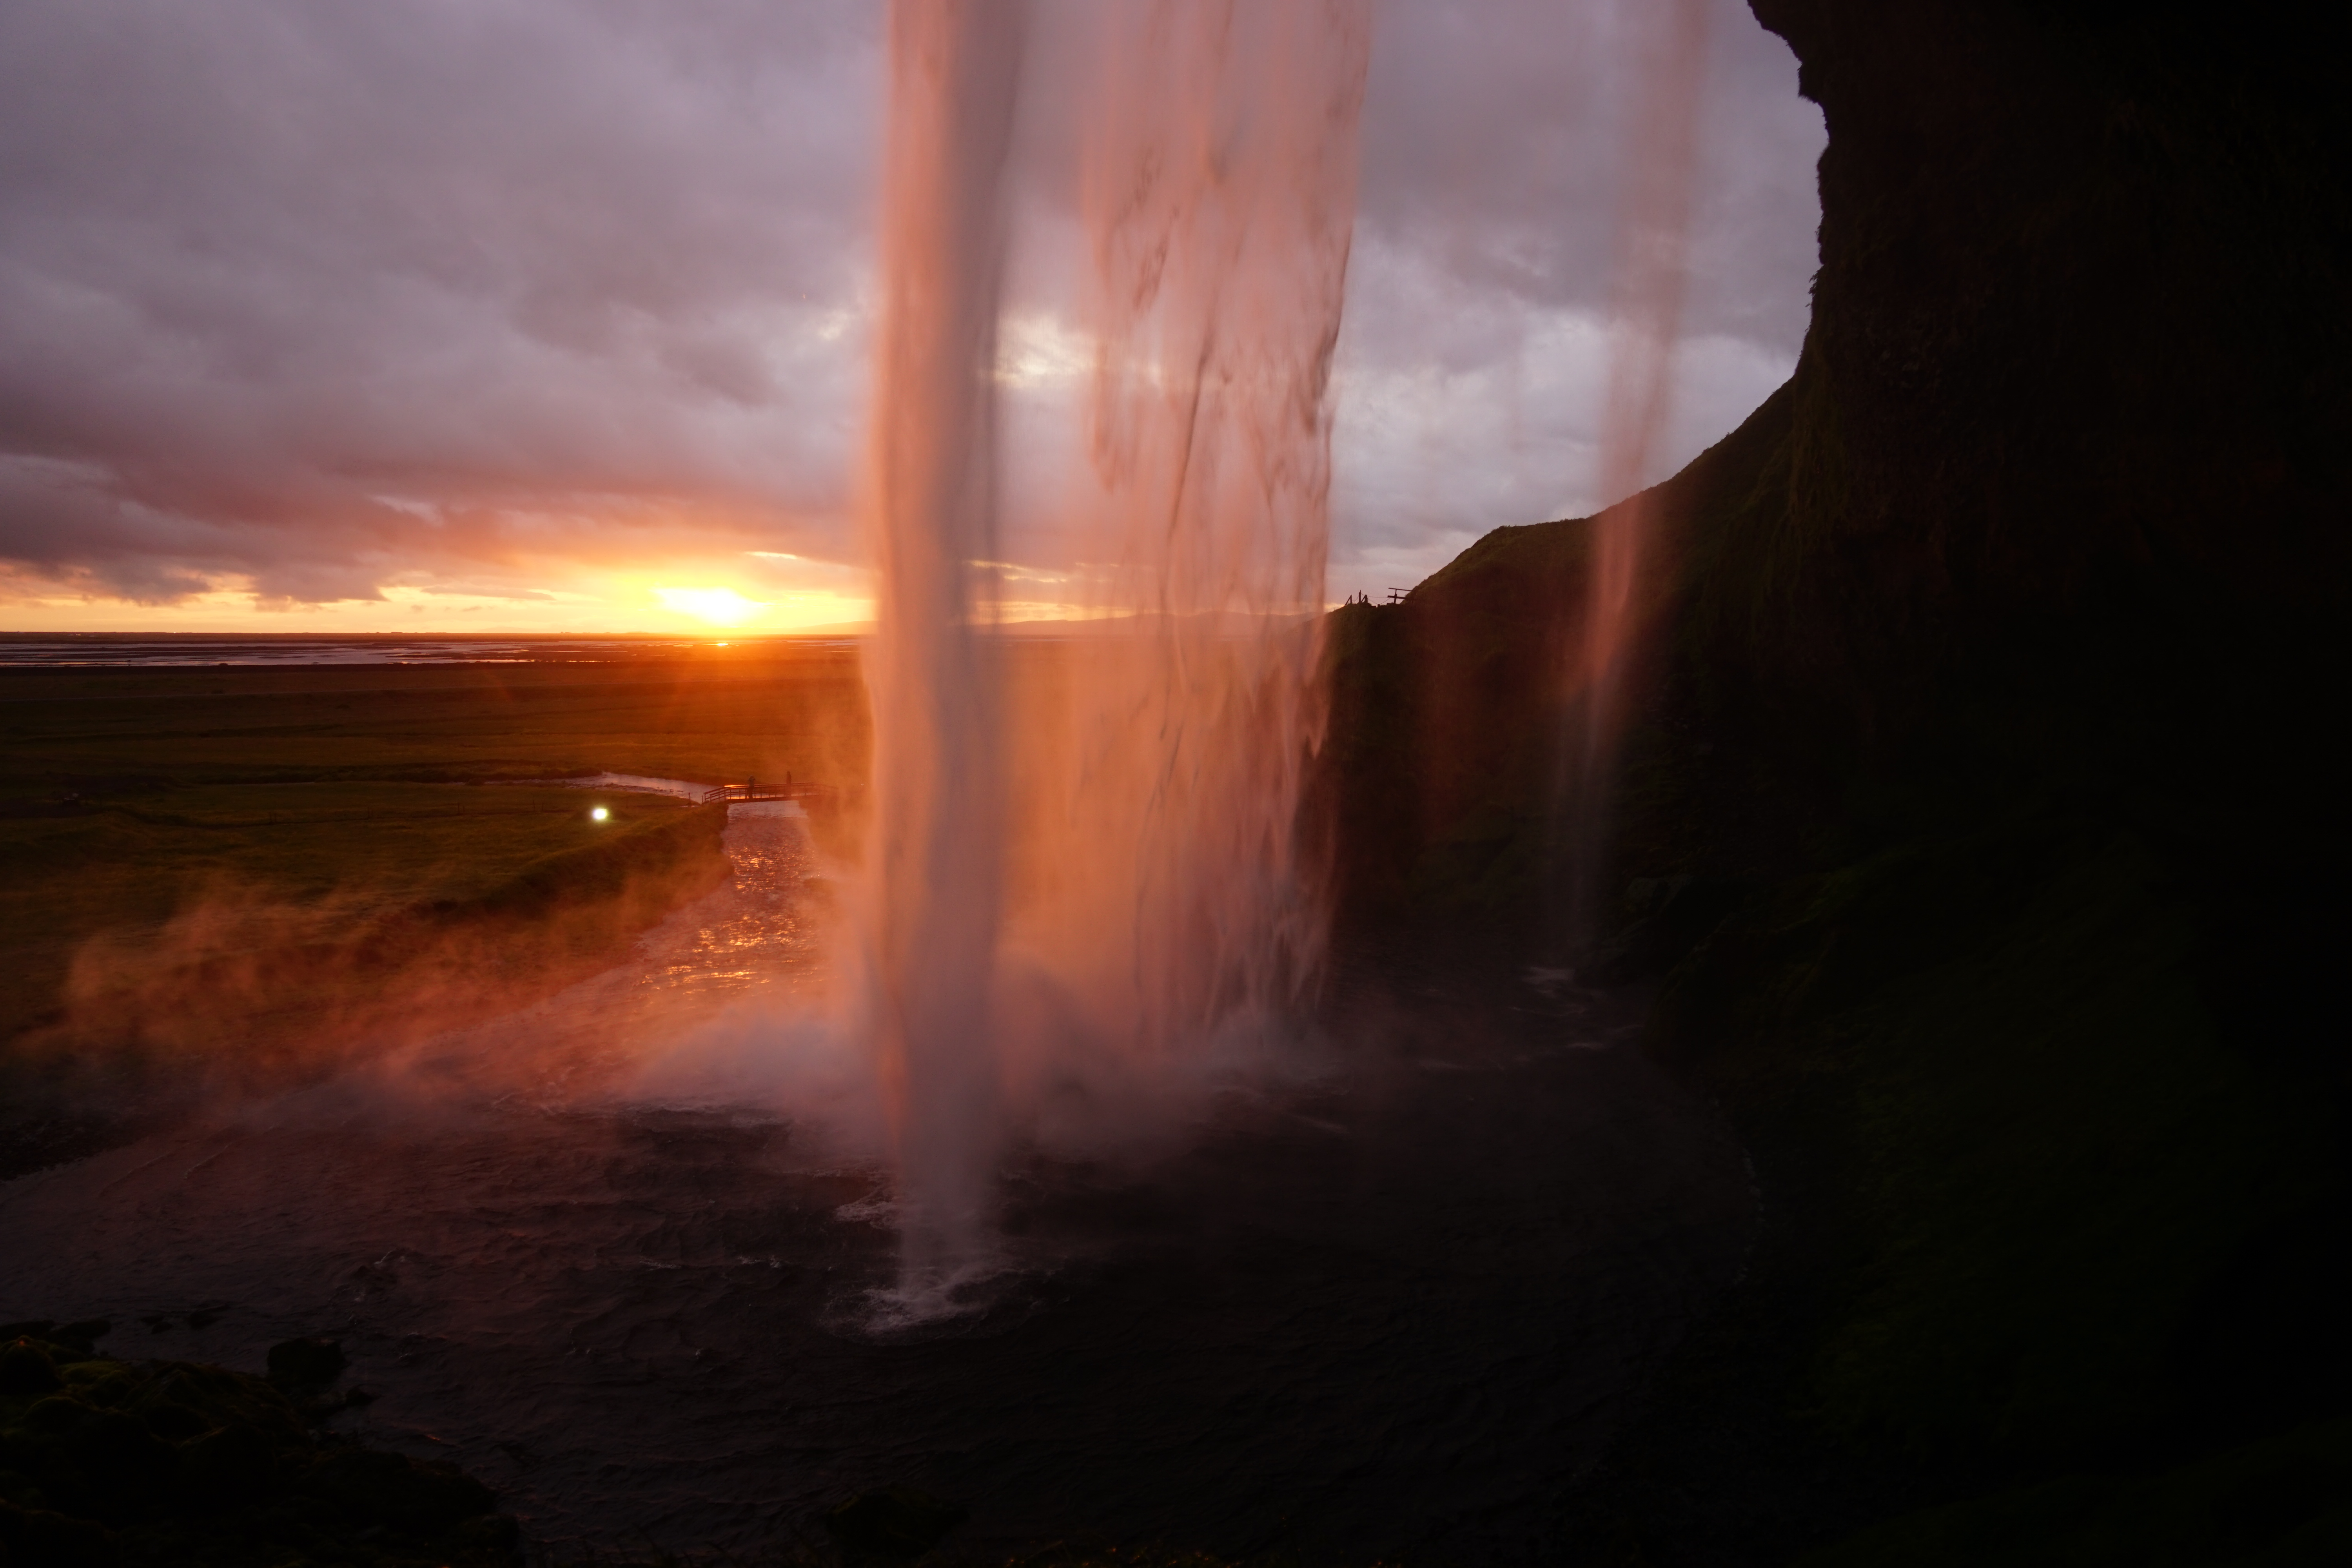 Wasserfall Seljalandsfoss mit Sonnenuntergang